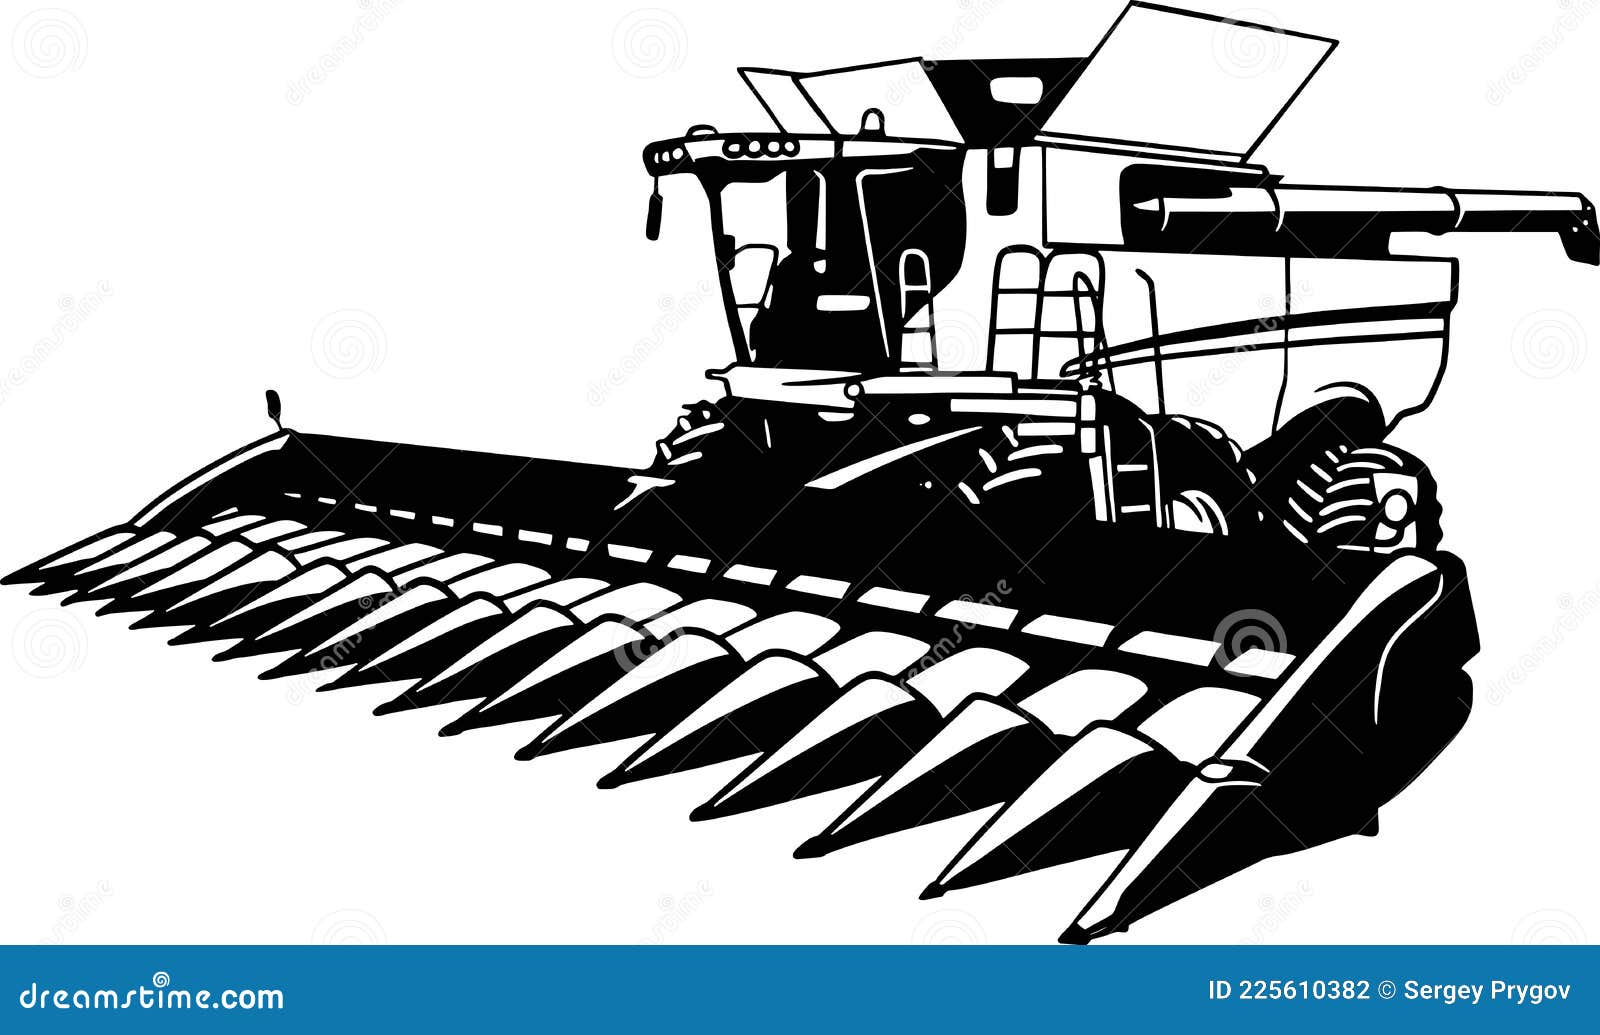 harvester, combine - farm tractor, farming vehicle - farm silhouette